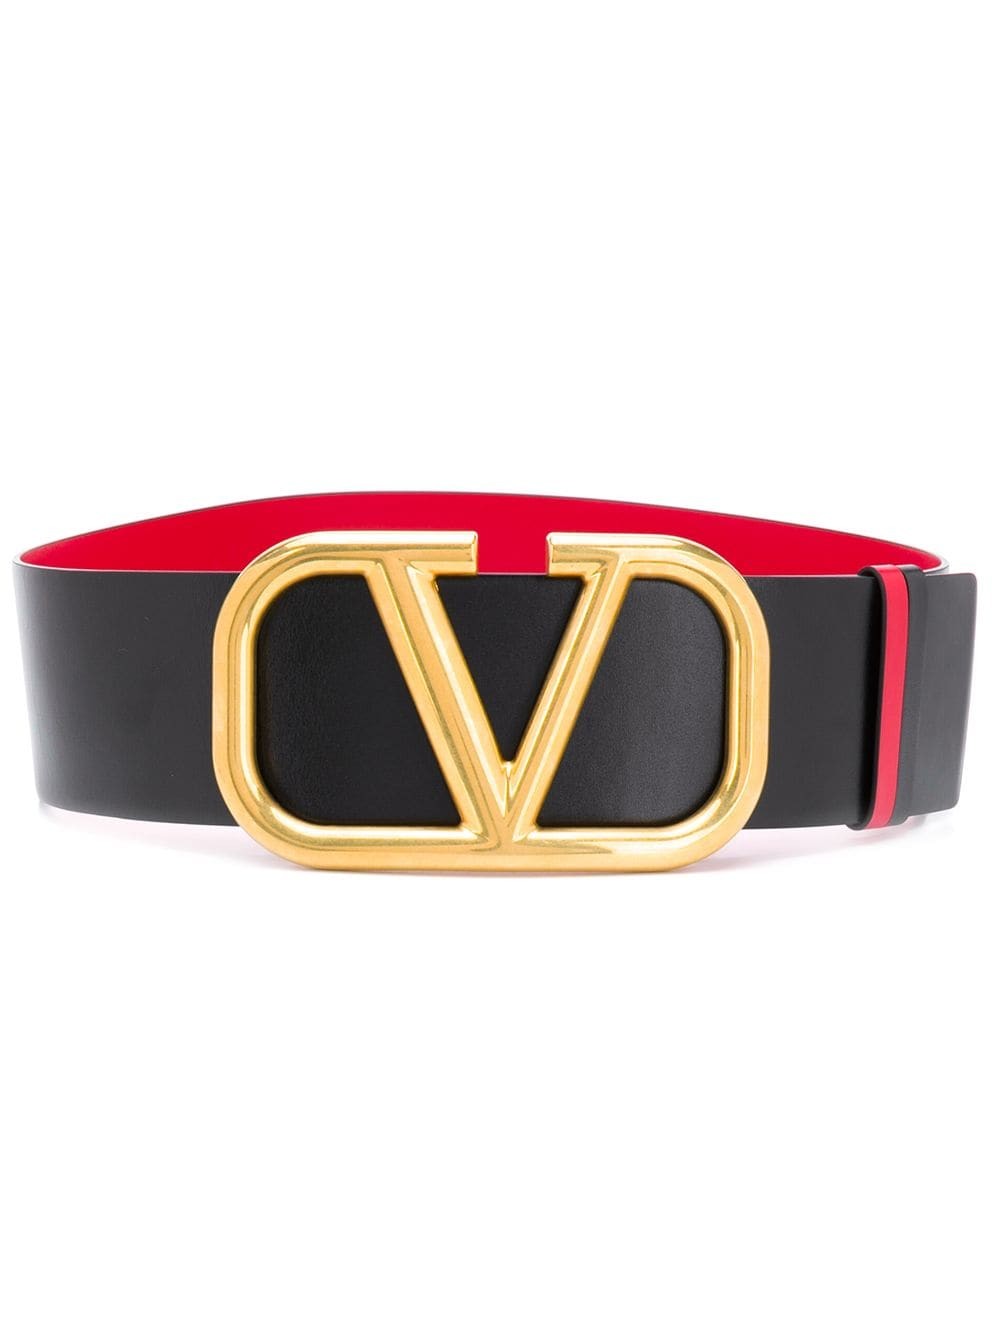 Garavani VLogo Signature Reversible Belt - Black/Red